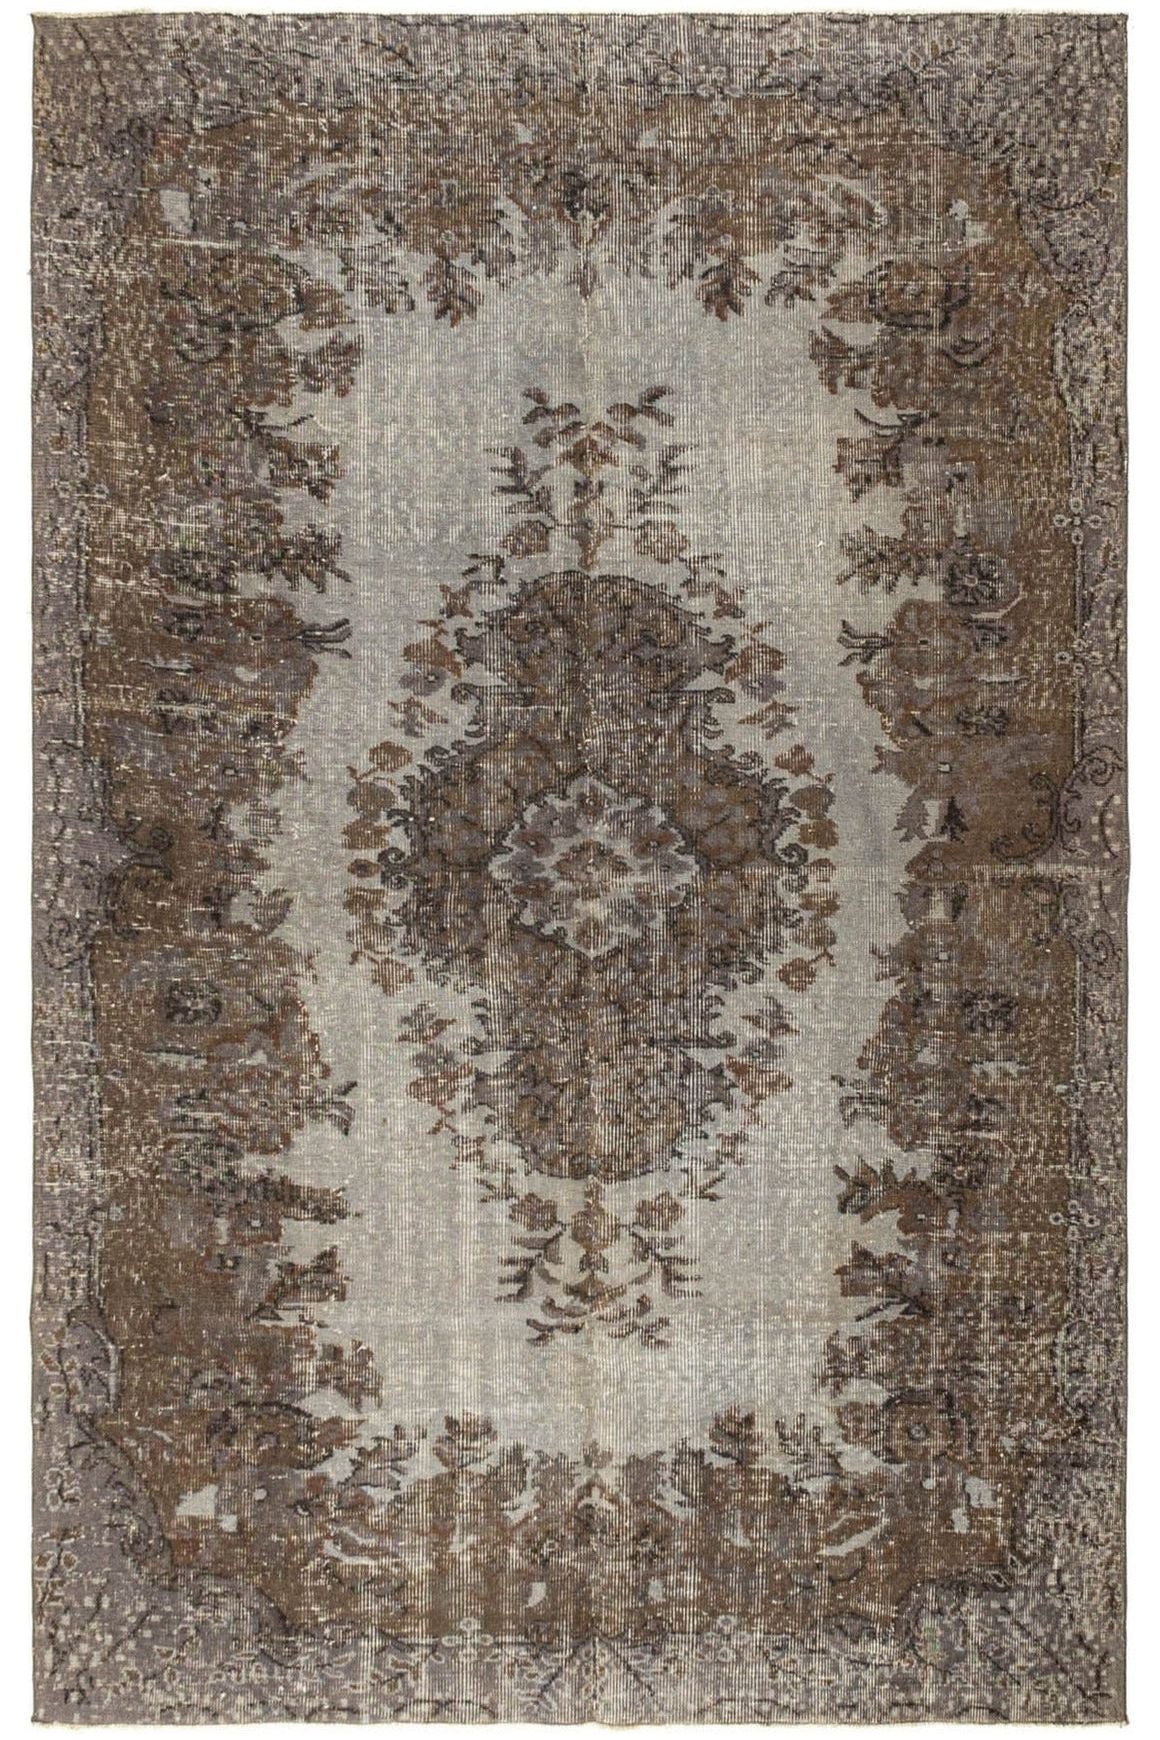 #Turkish_Carpets_Rugs# #Modern_Carpets# #Abrash_Carpets#Abrash-Turvi071600249-175X250